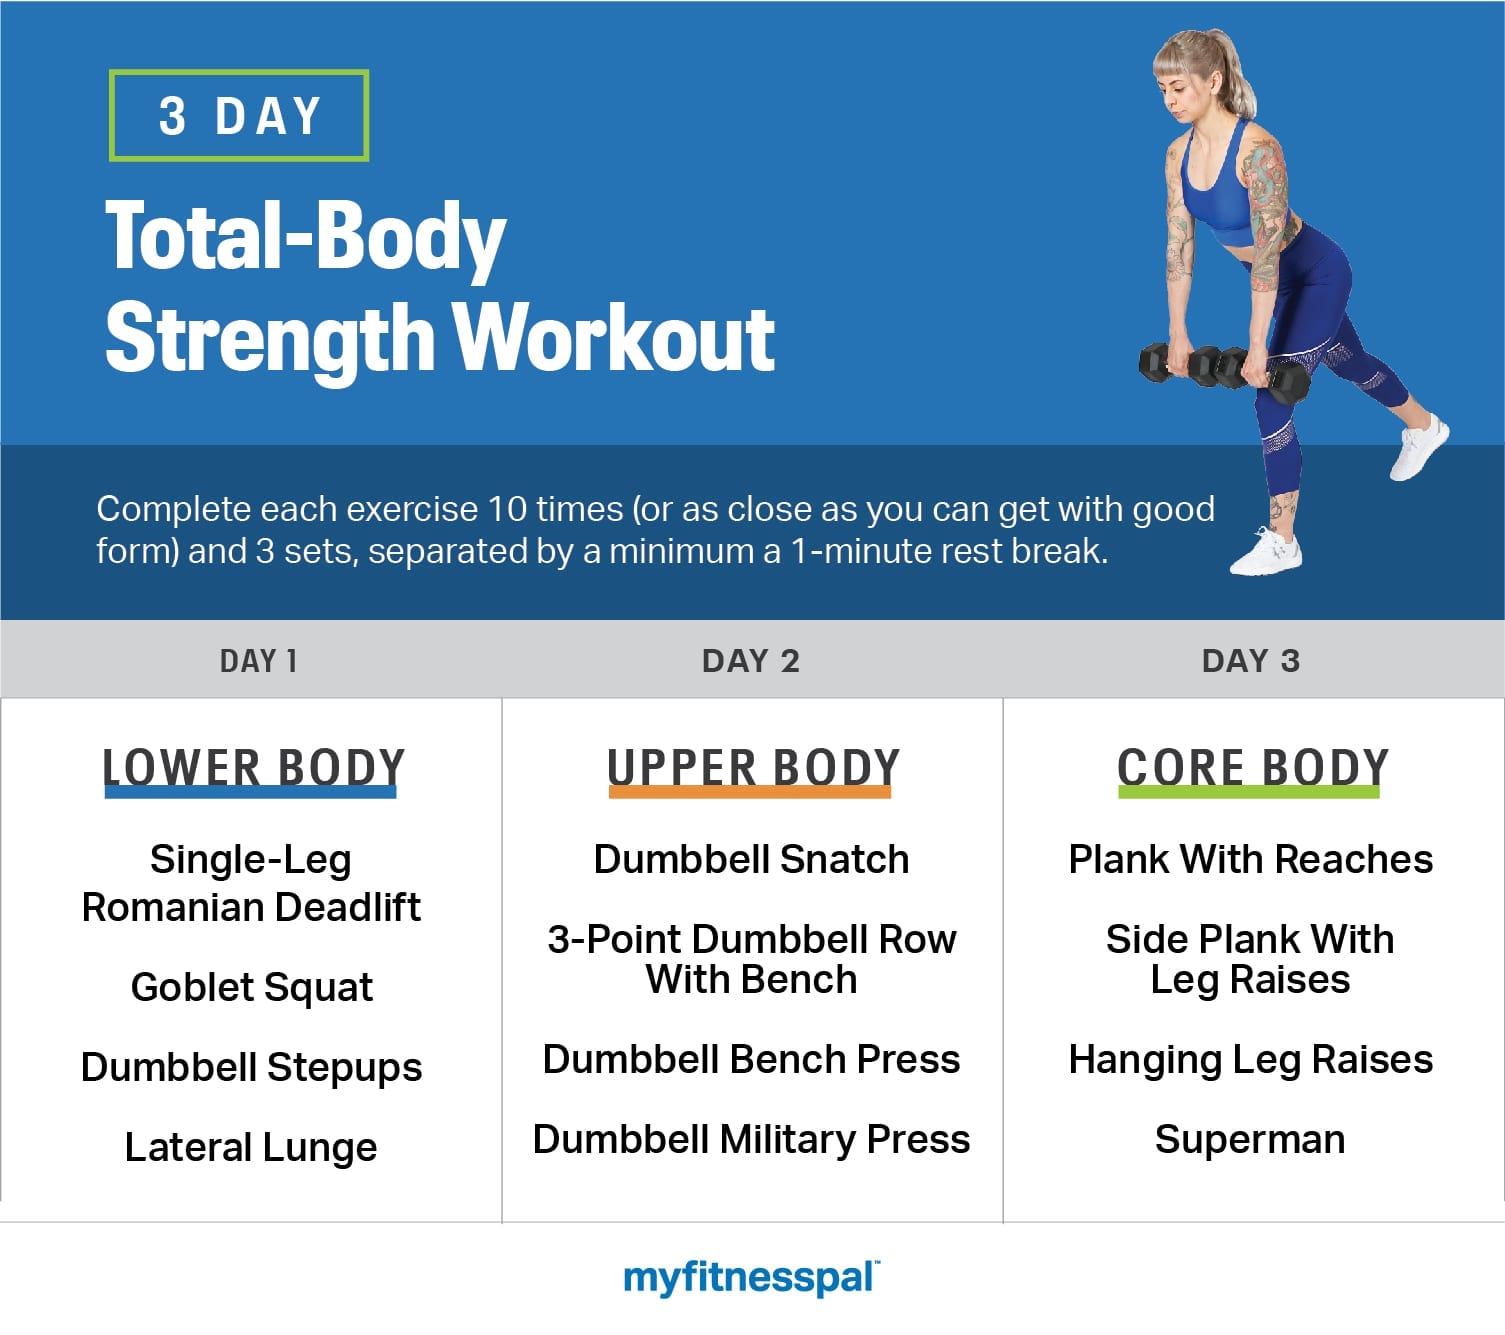 https://blog.myfitnesspal.com/wp-content/uploads/2021/03/MFP-3-Day-Total-Body-Strength-Workout-chart.jpg